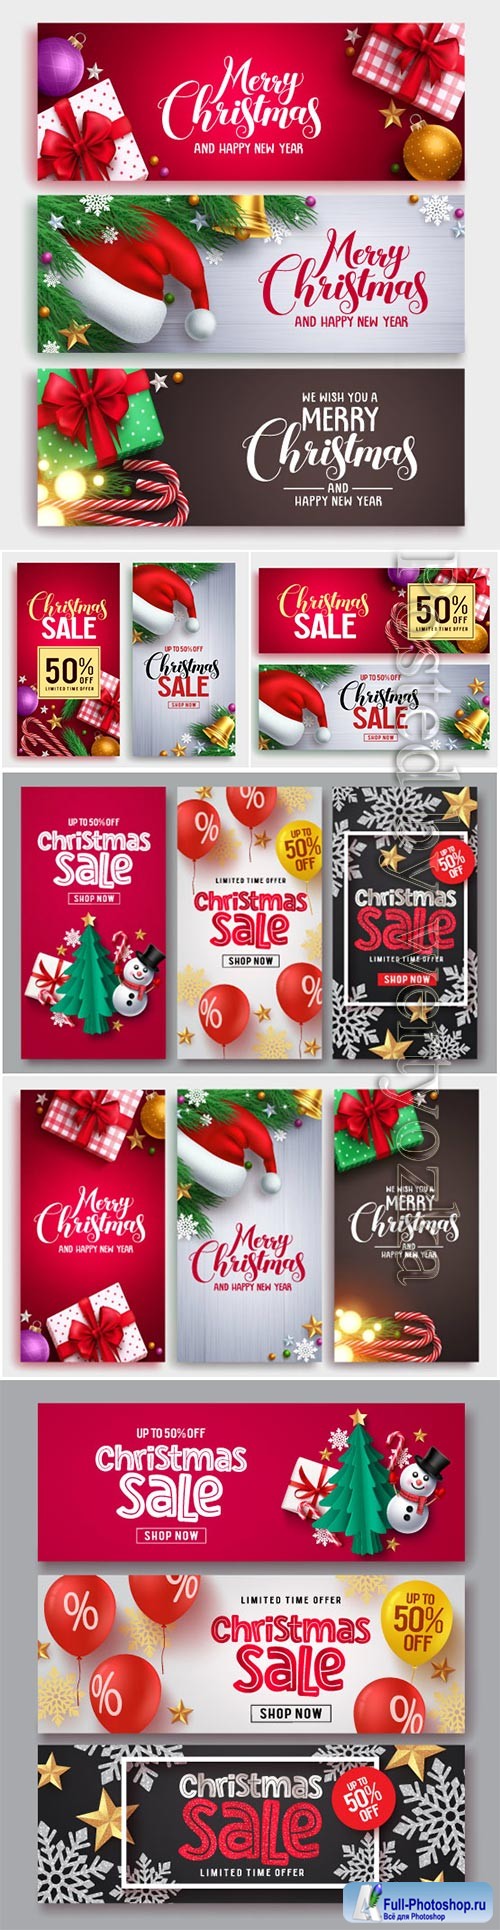 Christmas sale vector banner set